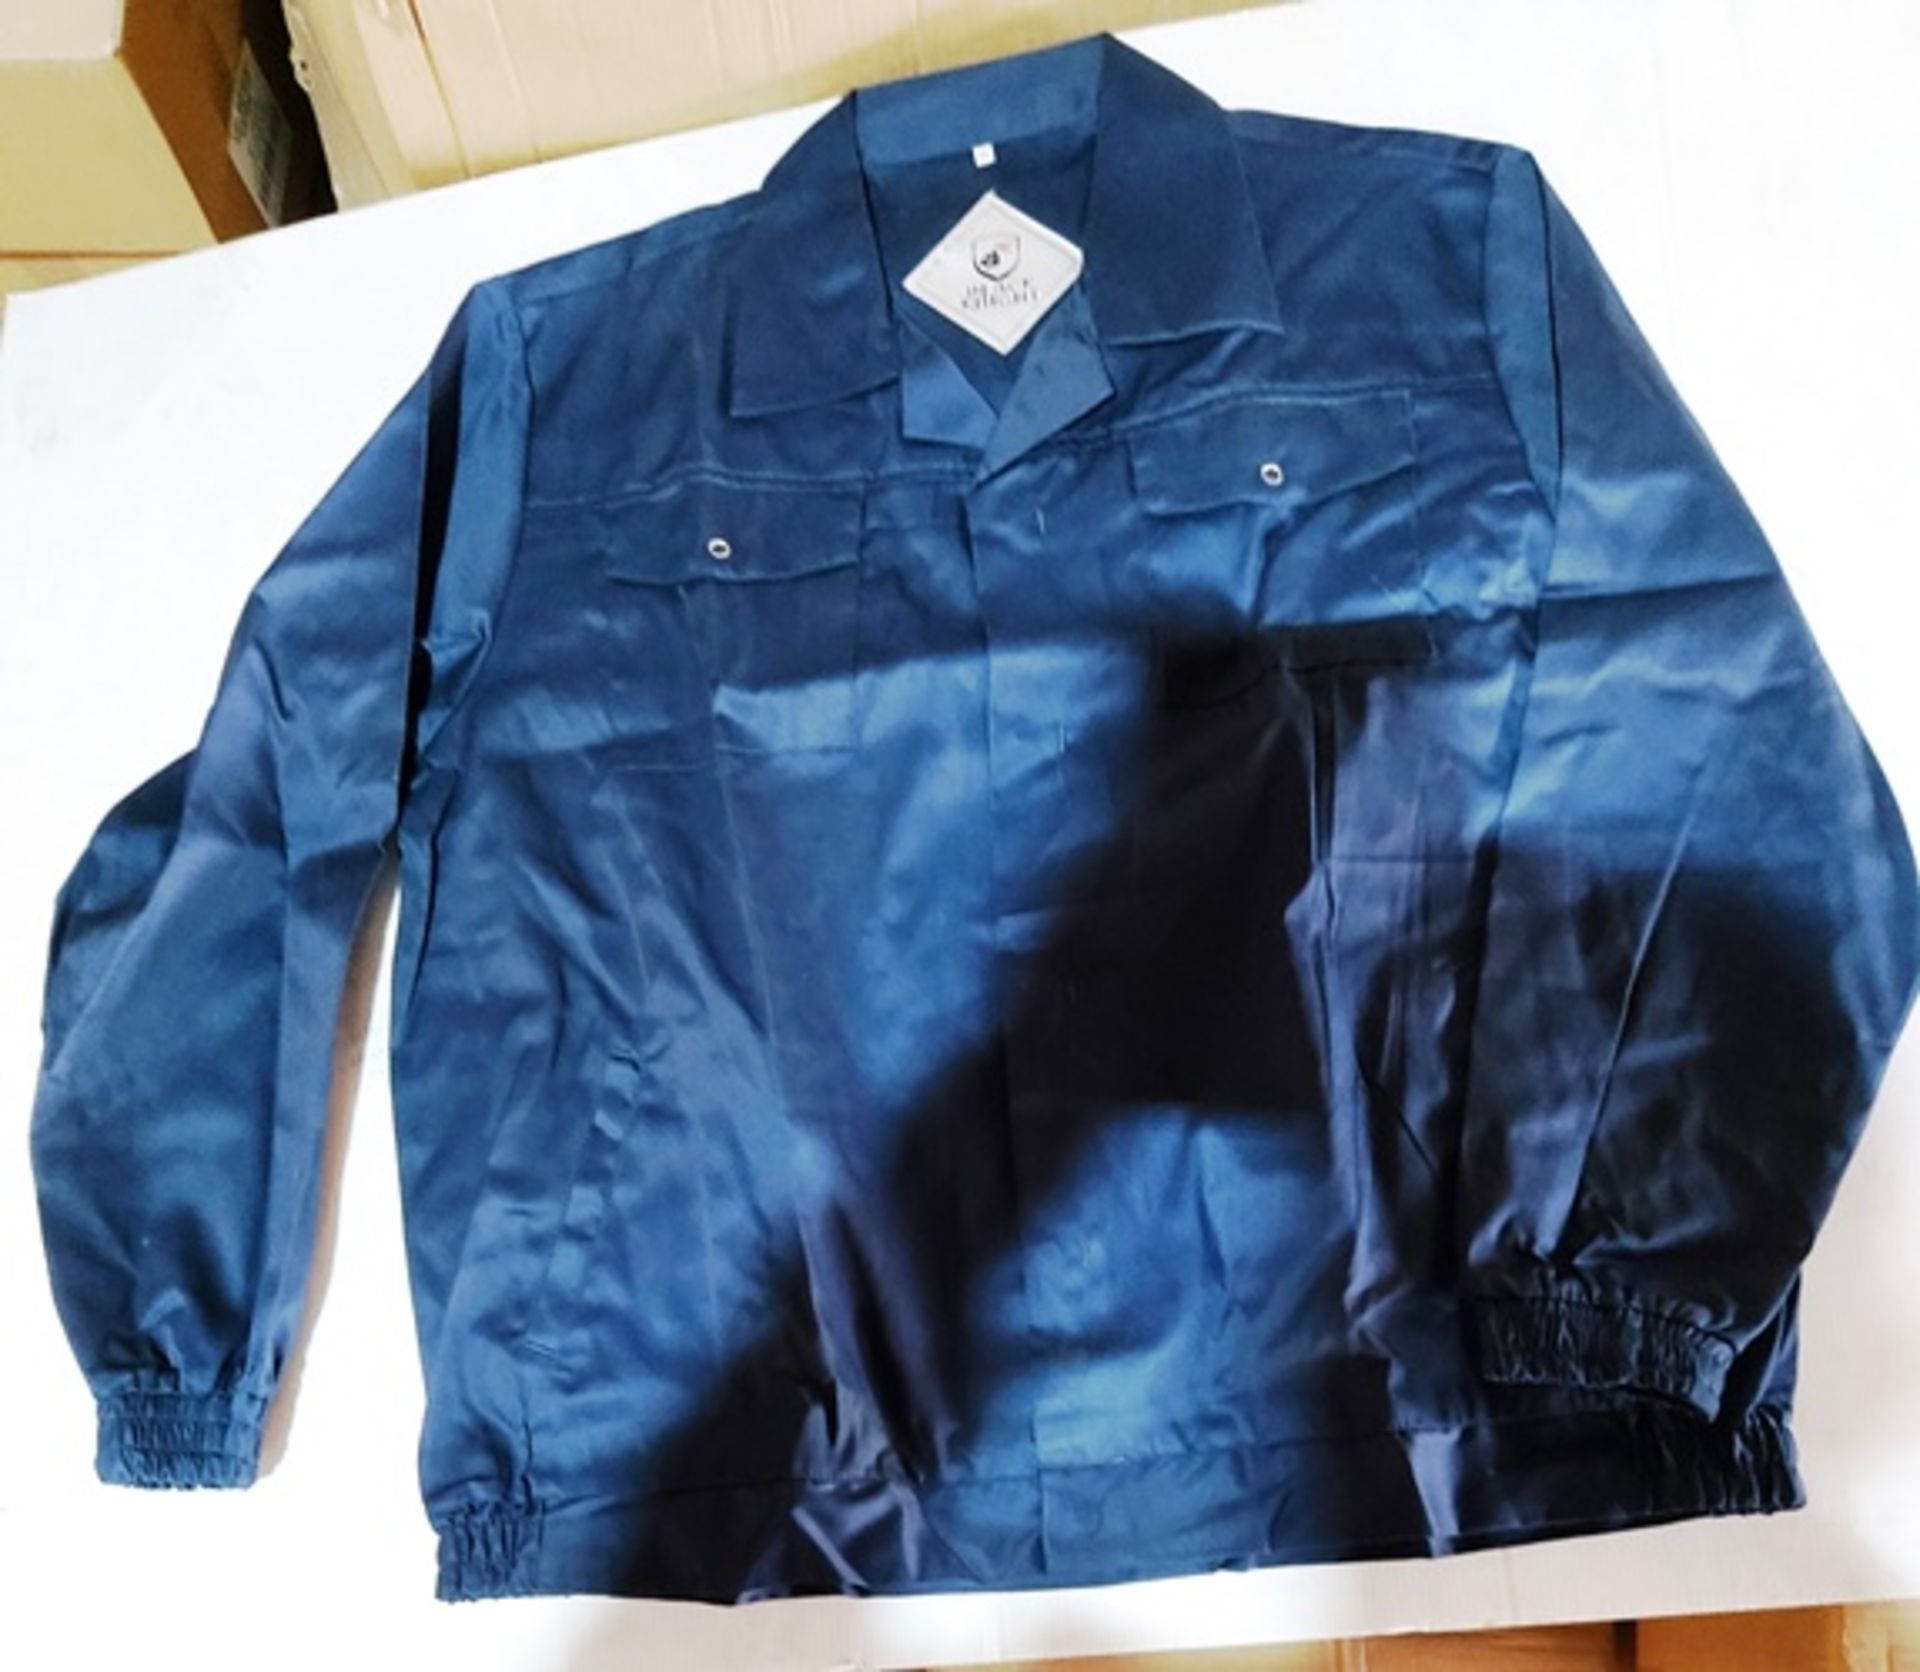 Appx 10 x Black Knight workwear jacket in navy size XXL new in original packaging